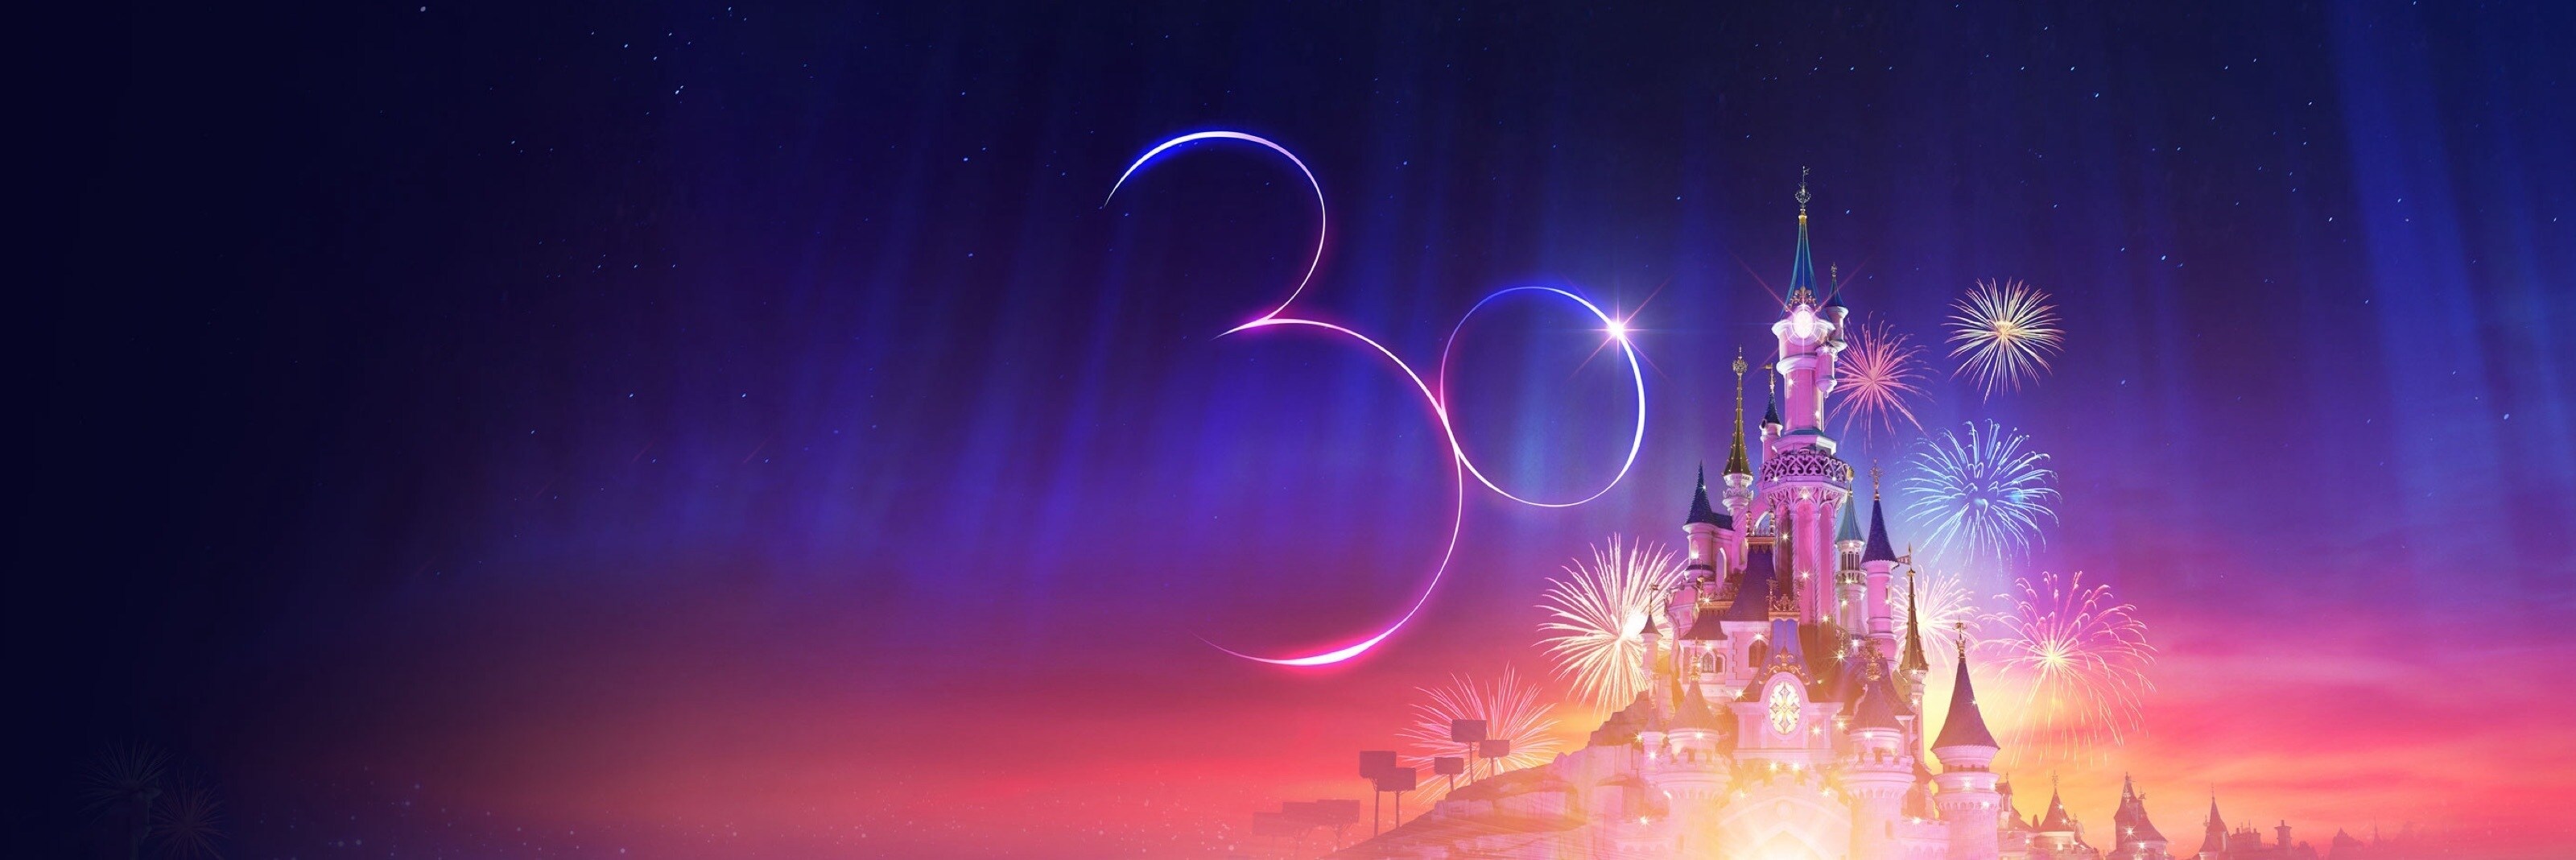 Disneyland® Paris - Let the magic shine!